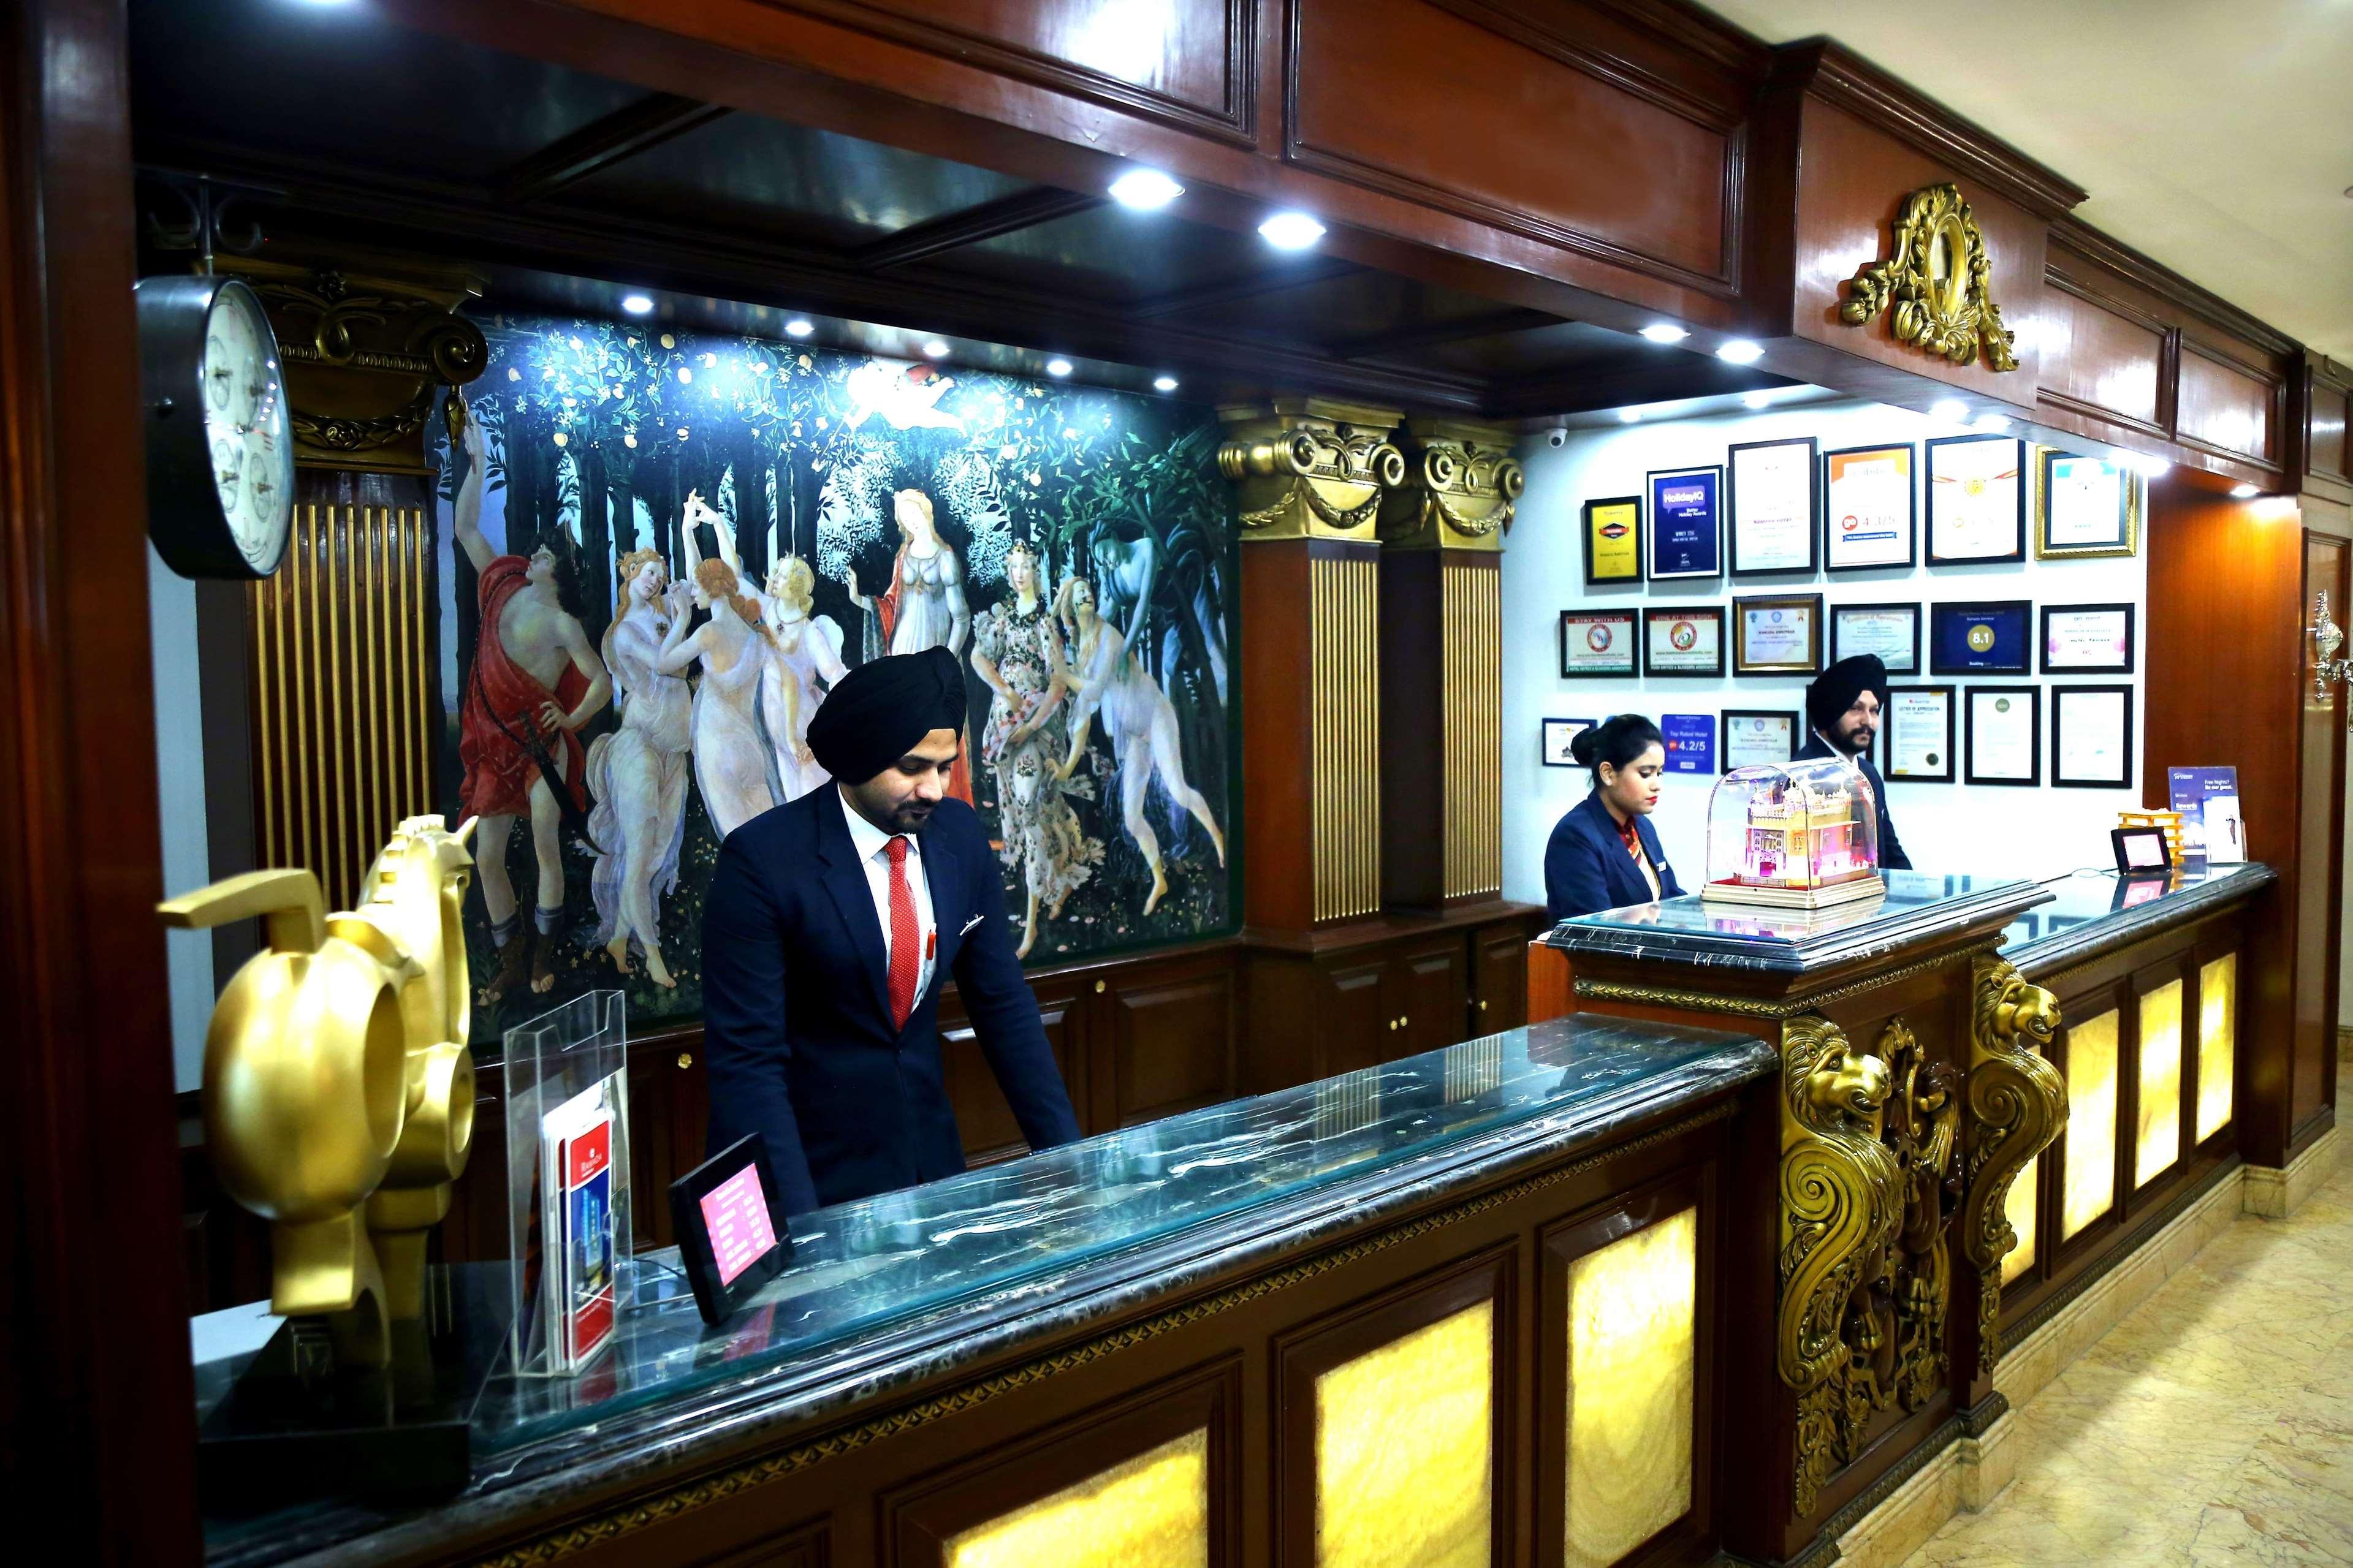 Ramada By Wyndham Amritsar Hotel Exterior photo